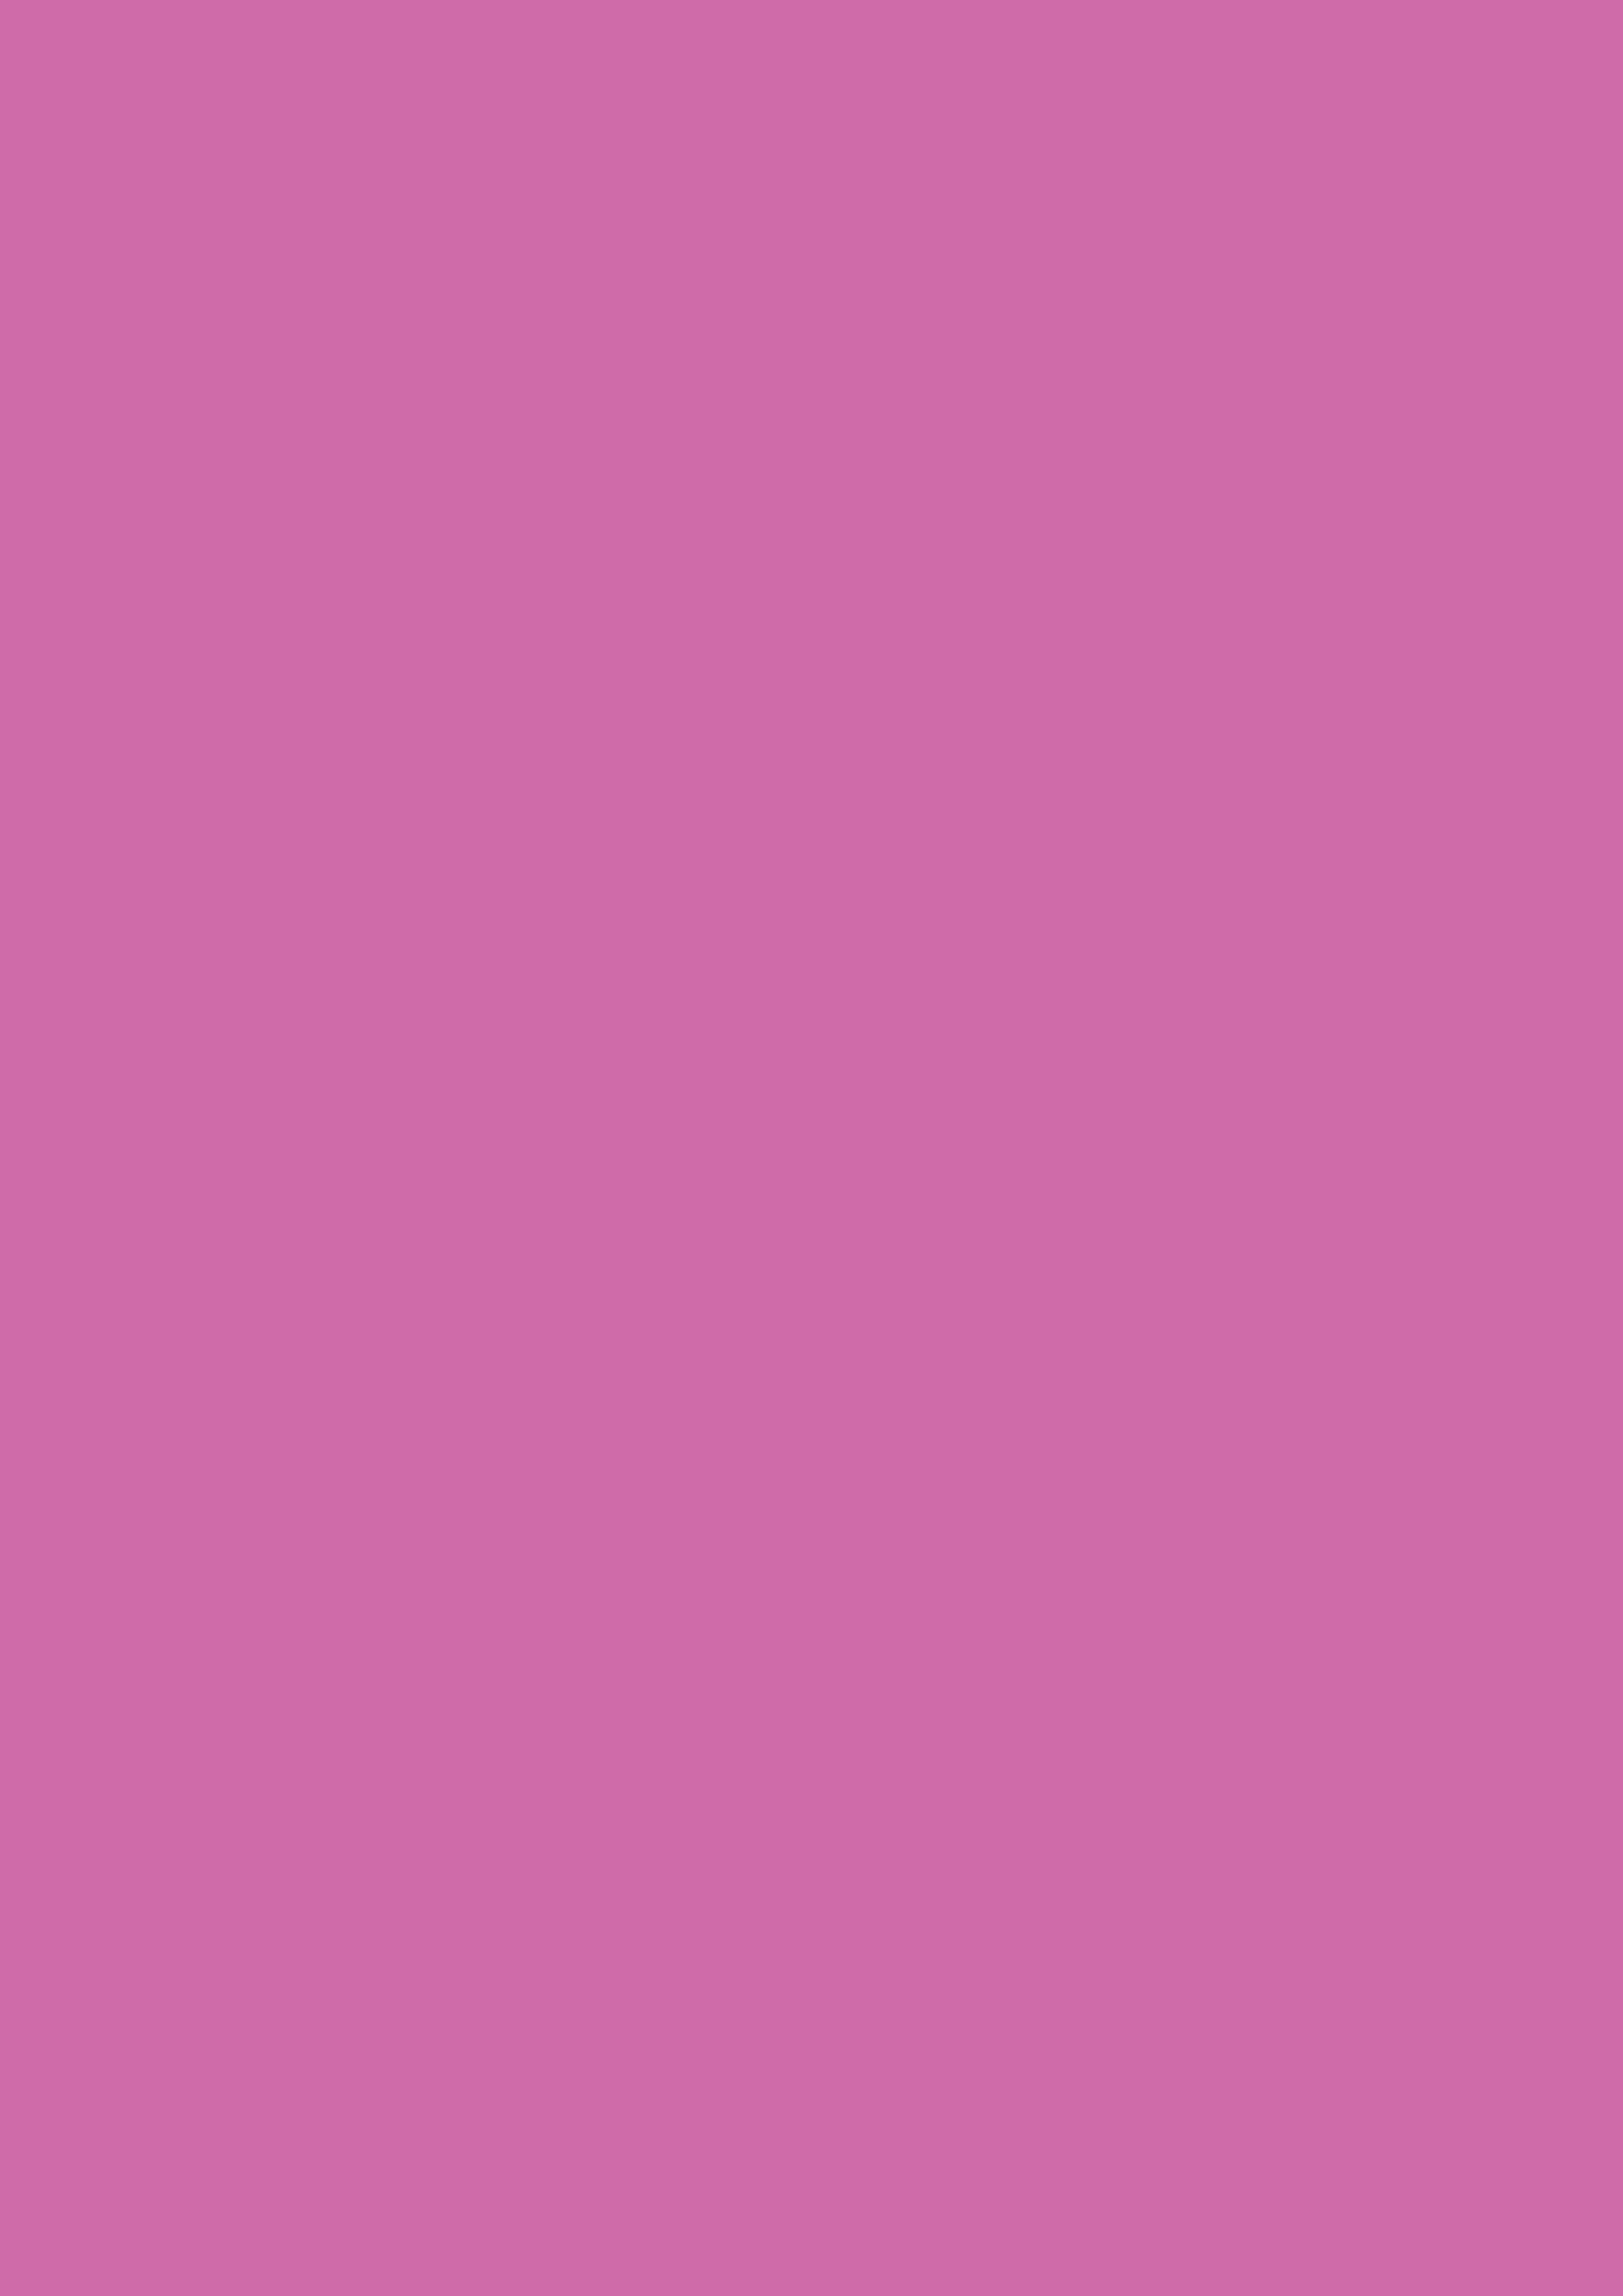 2480x3508 Super Pink Solid Color Background